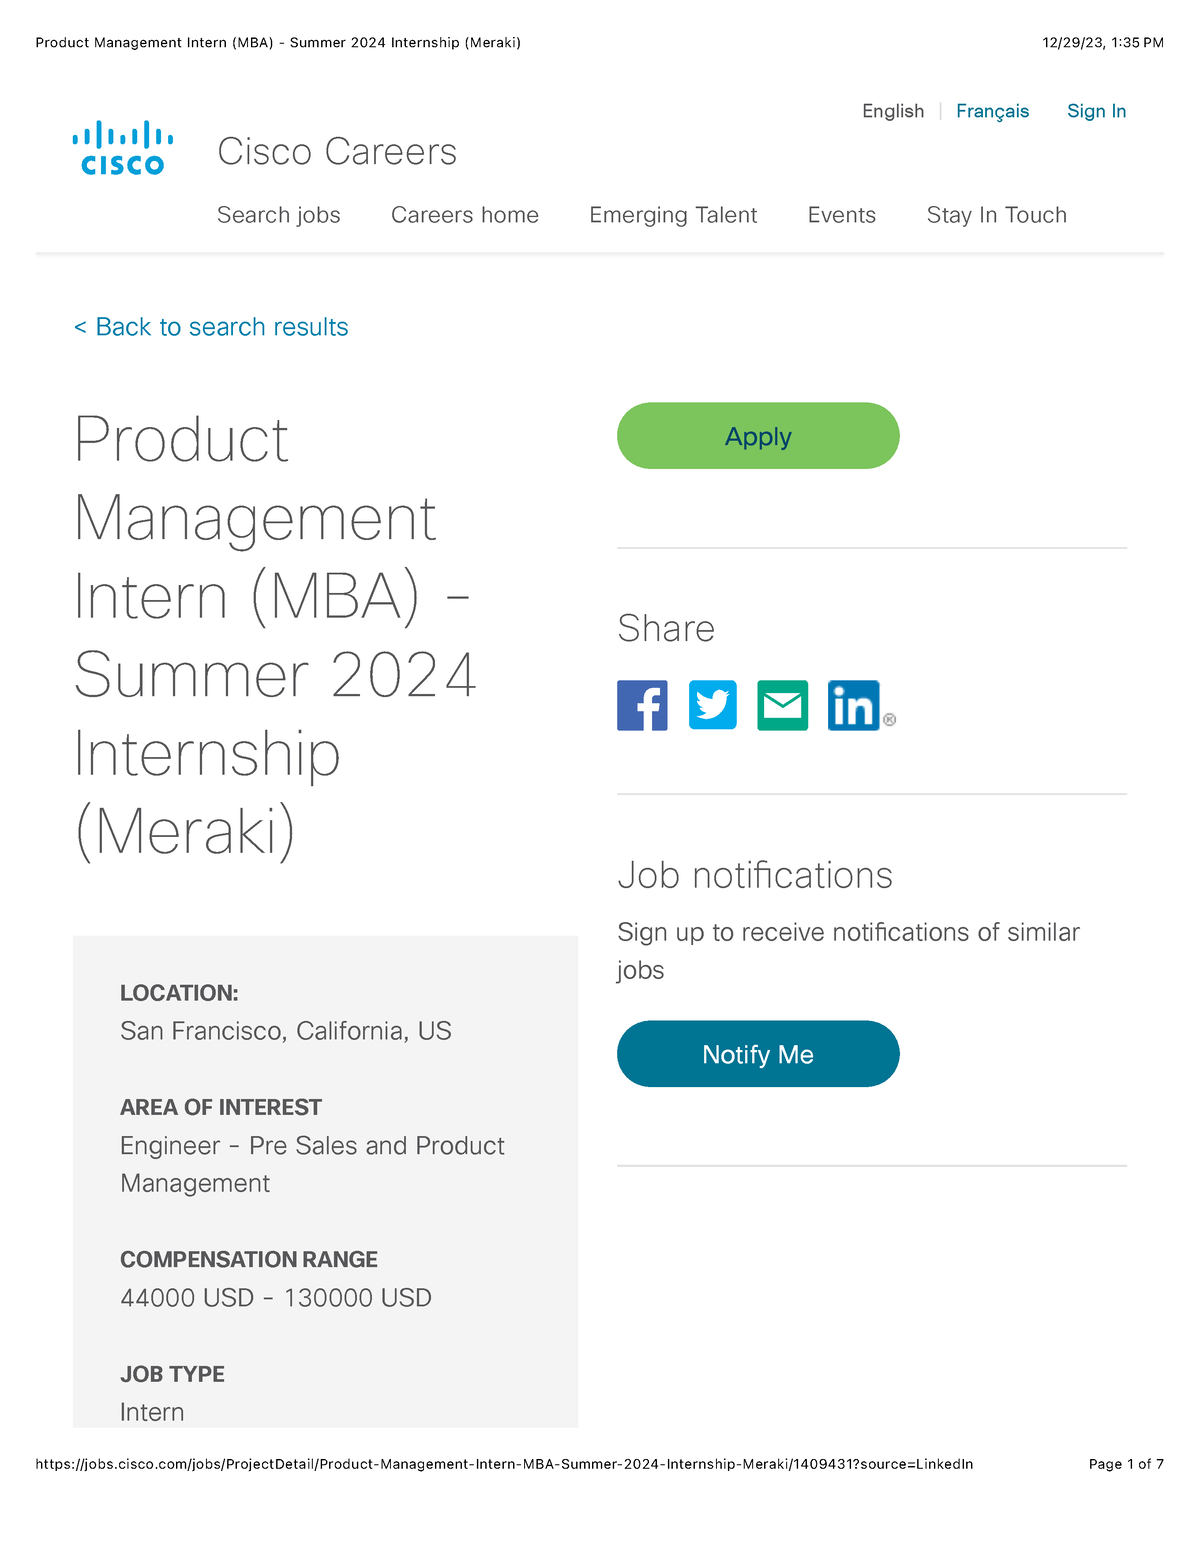 Cisco Product Management Intern (MBA) Summer 2024 Internship